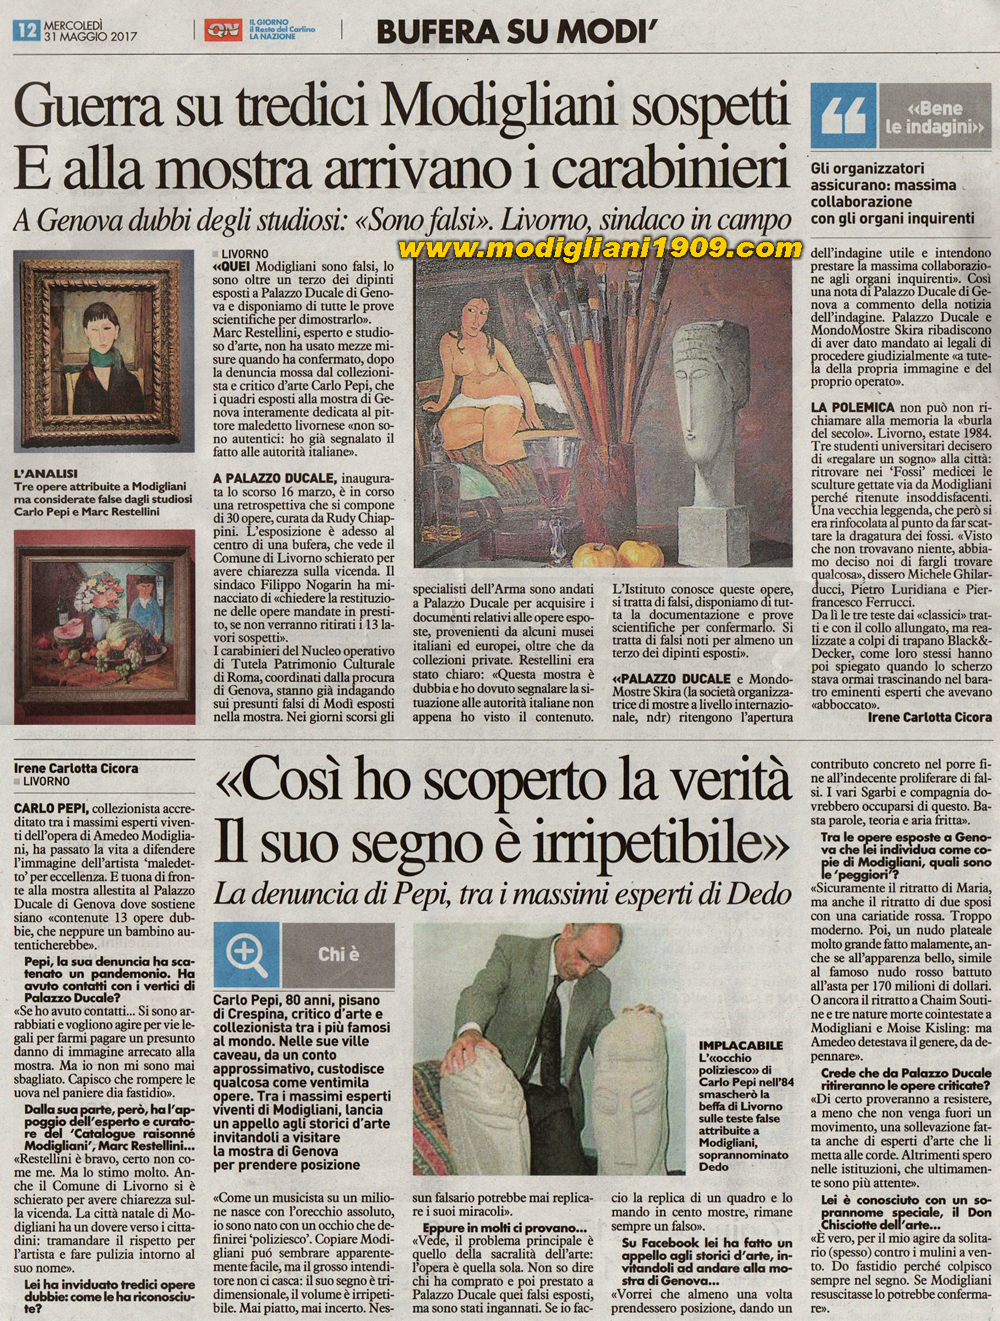 War on the 13 suspicious Modigliani - And the Carabinieri goes to Genoa